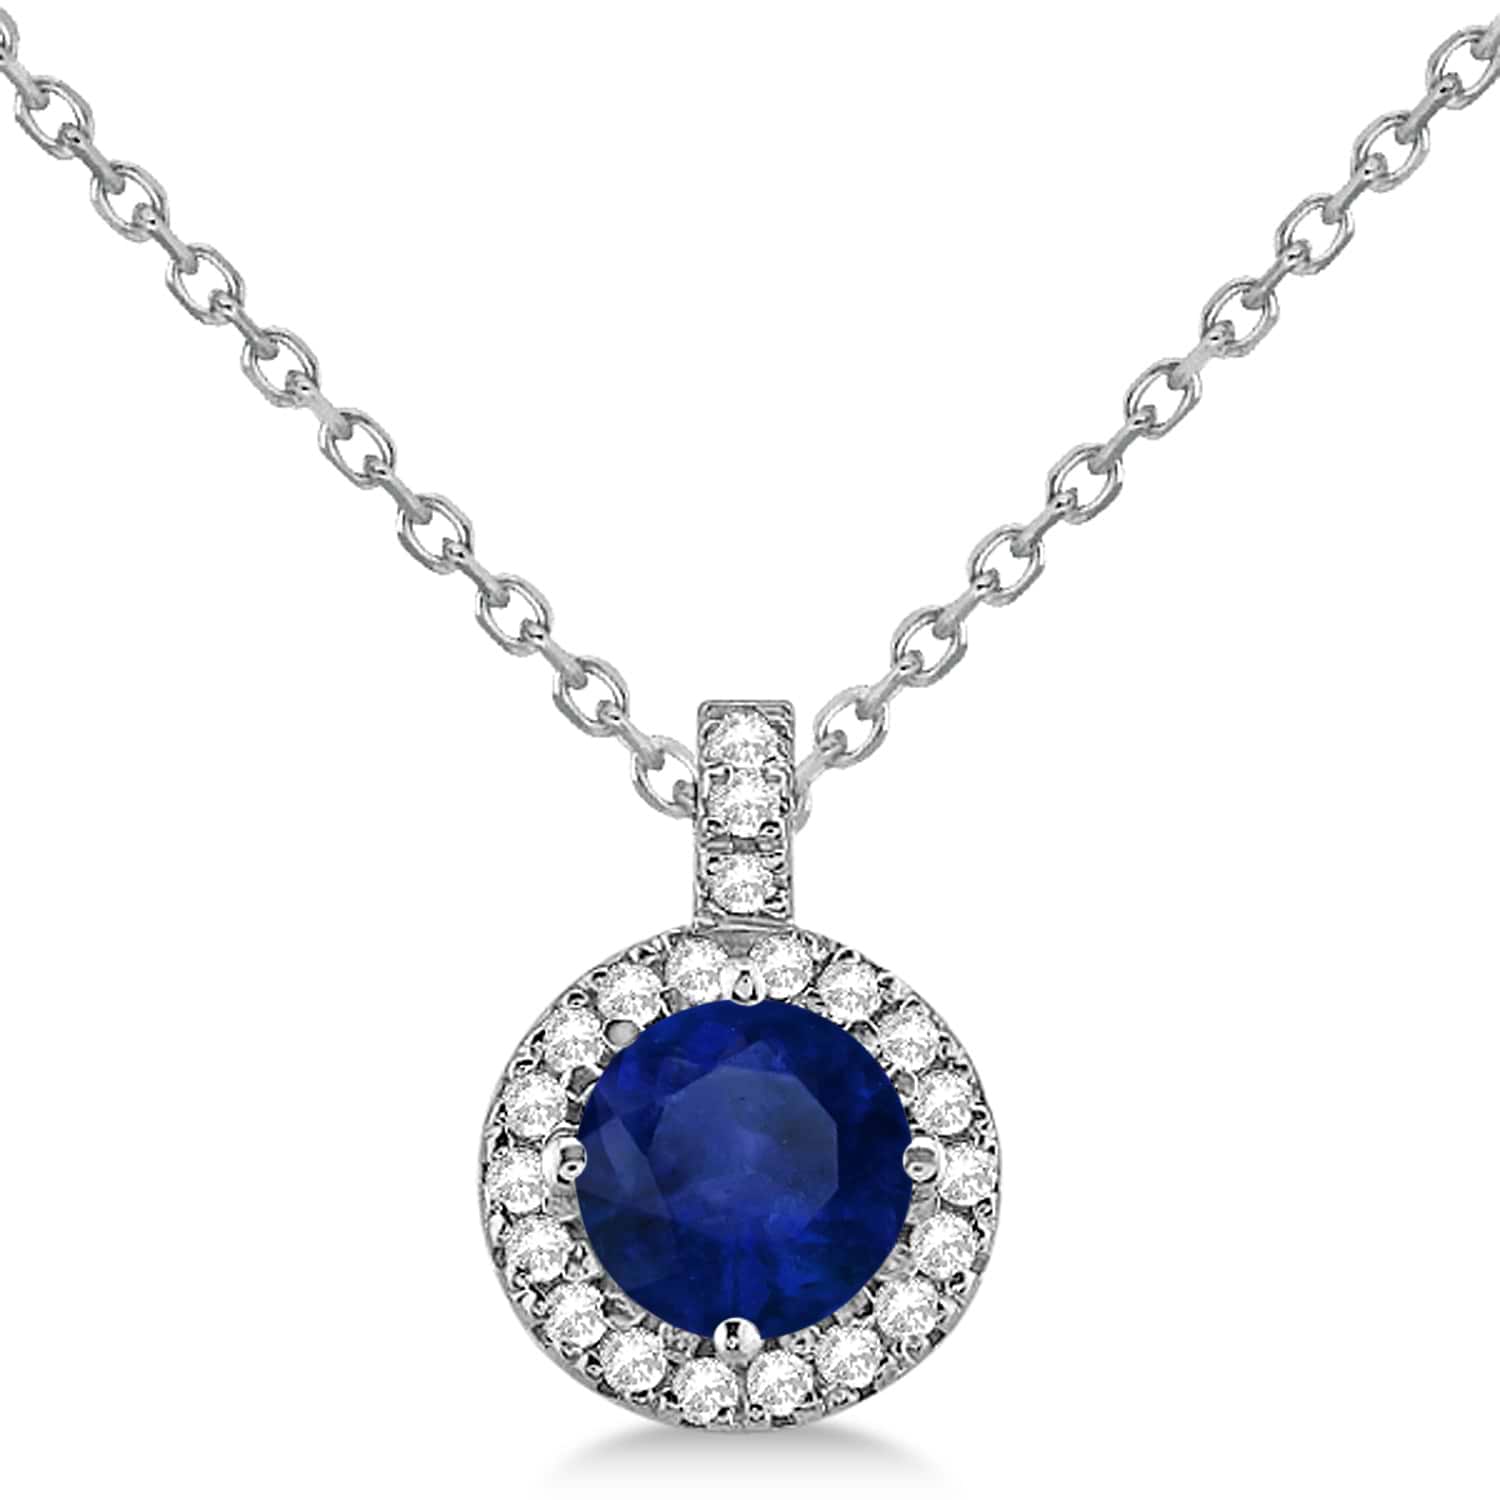 Blue Sapphire & Diamond Halo Pendant Necklace 14k White Gold (2.33ct)